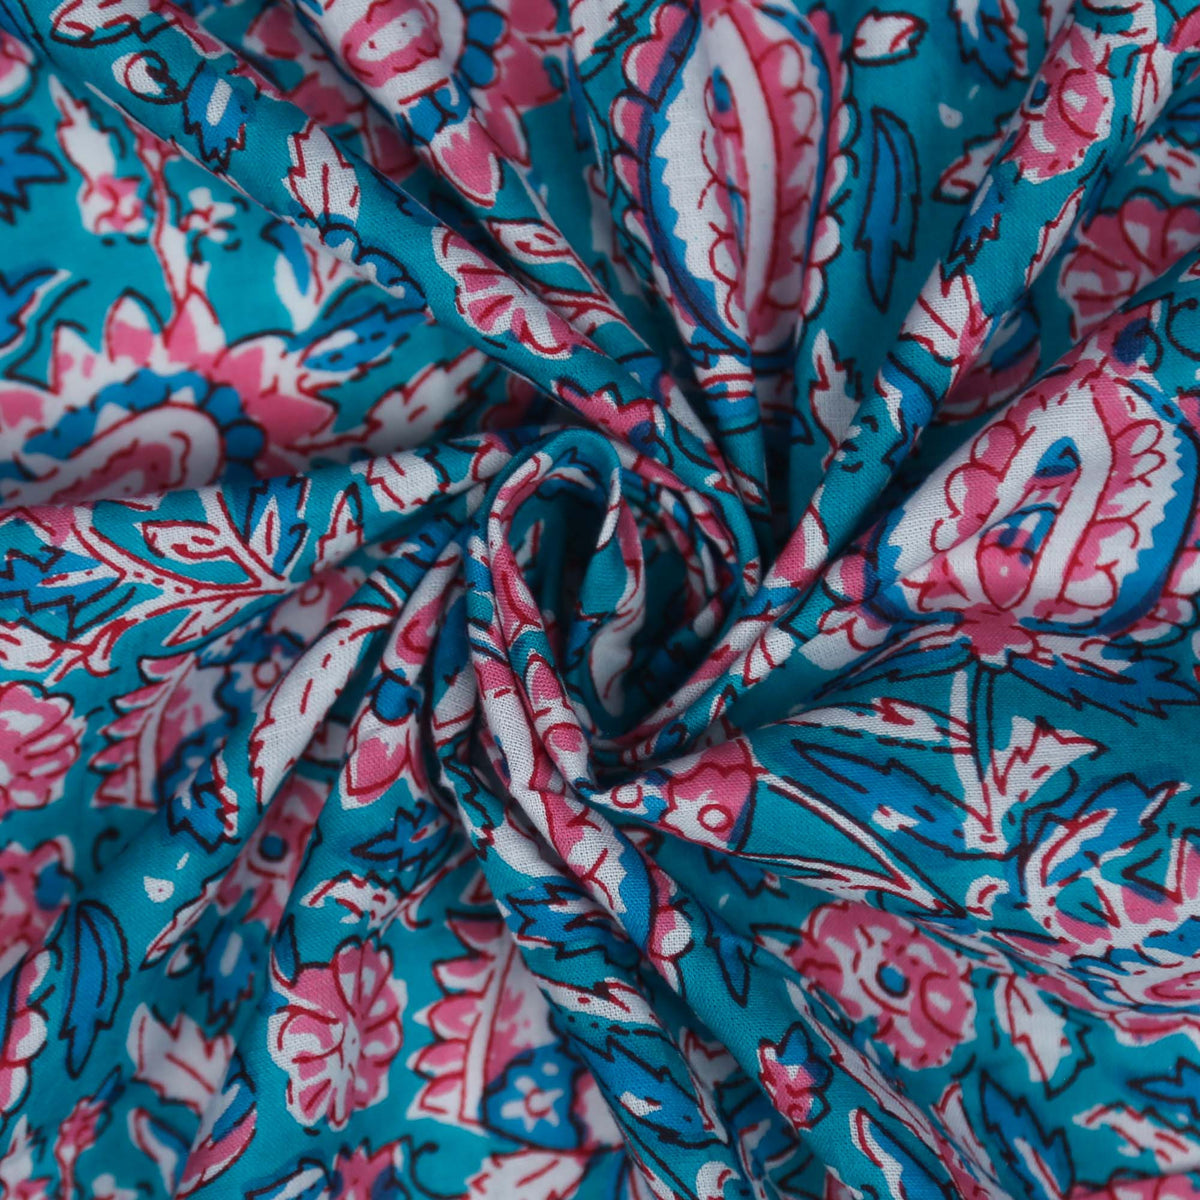 Block Print Fabric - Wild Flowers On Teal Blue(Design 520)